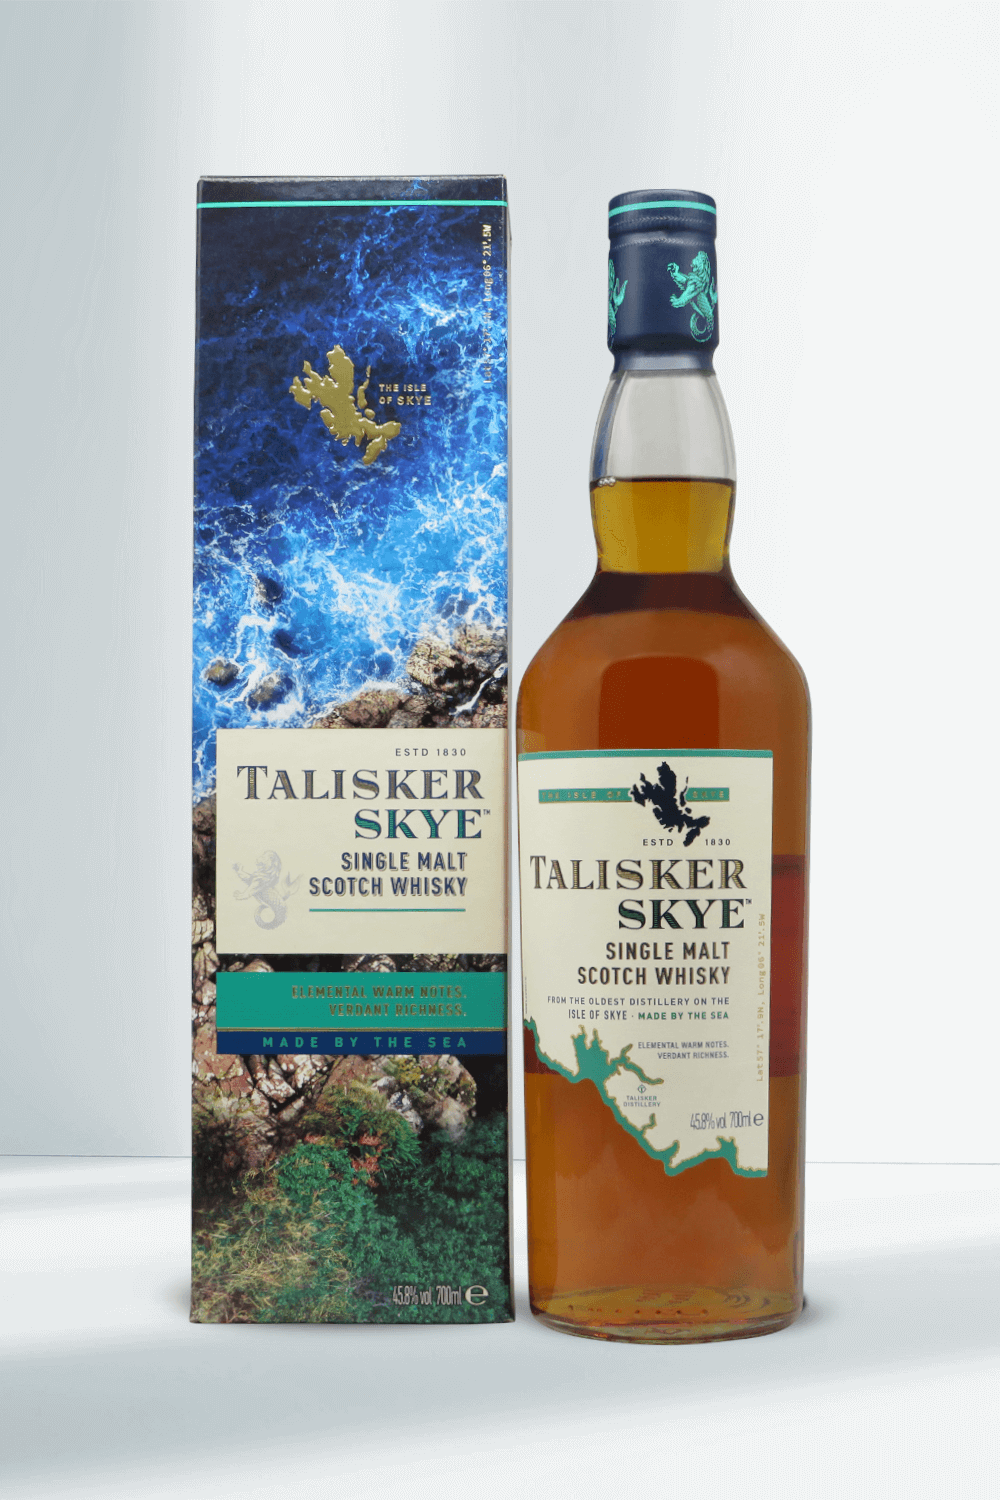 Talisker Skye Single Malt Scotch Whisky I Beverage-Shop